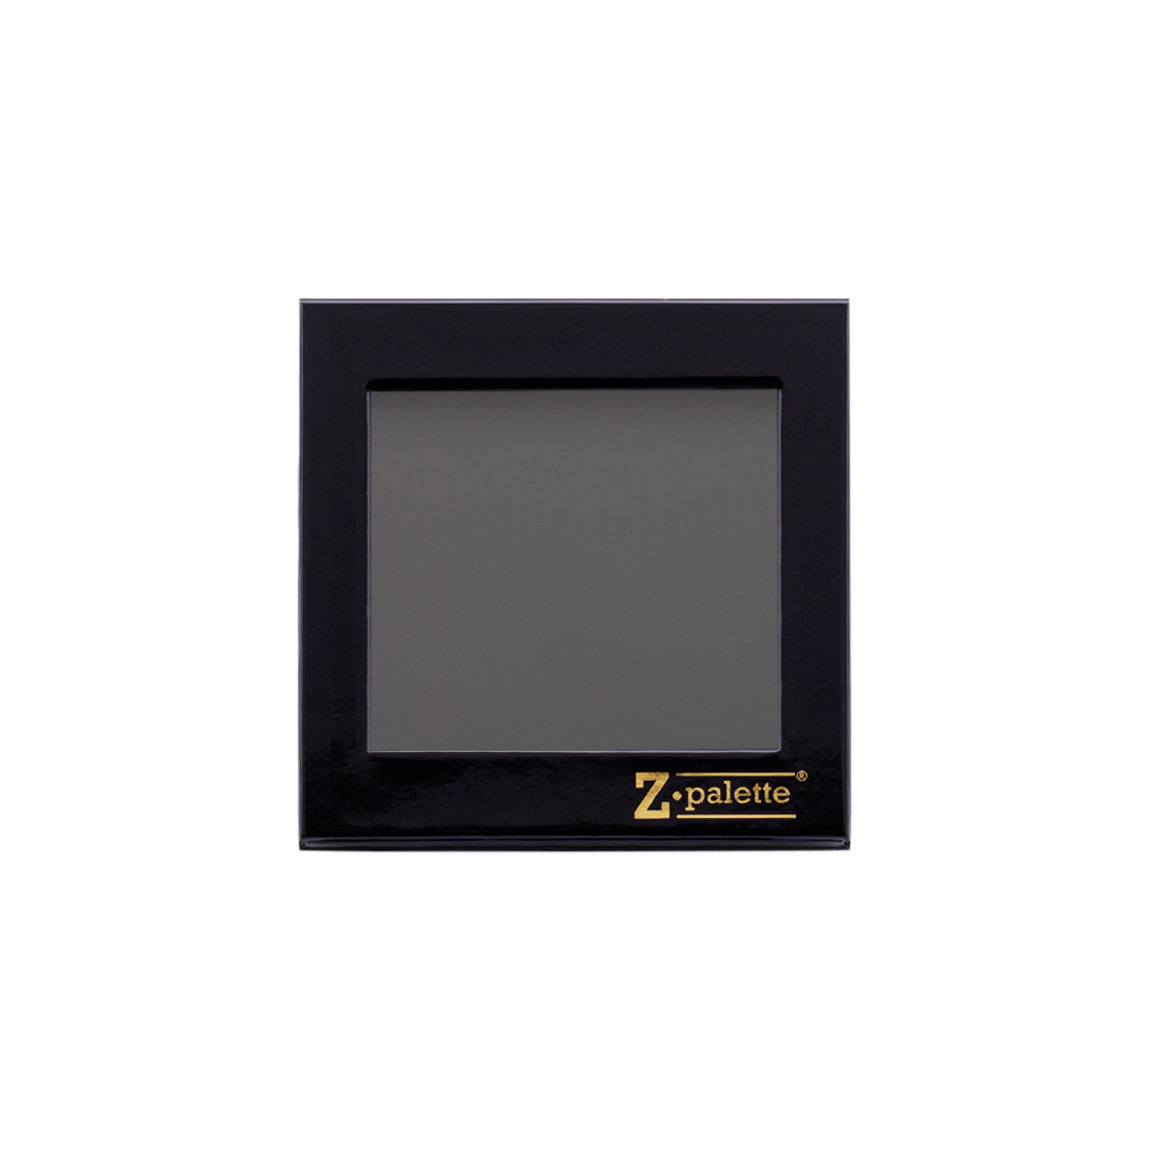 Z•Palette Small Palette Black alternative view 1 - product swatch.